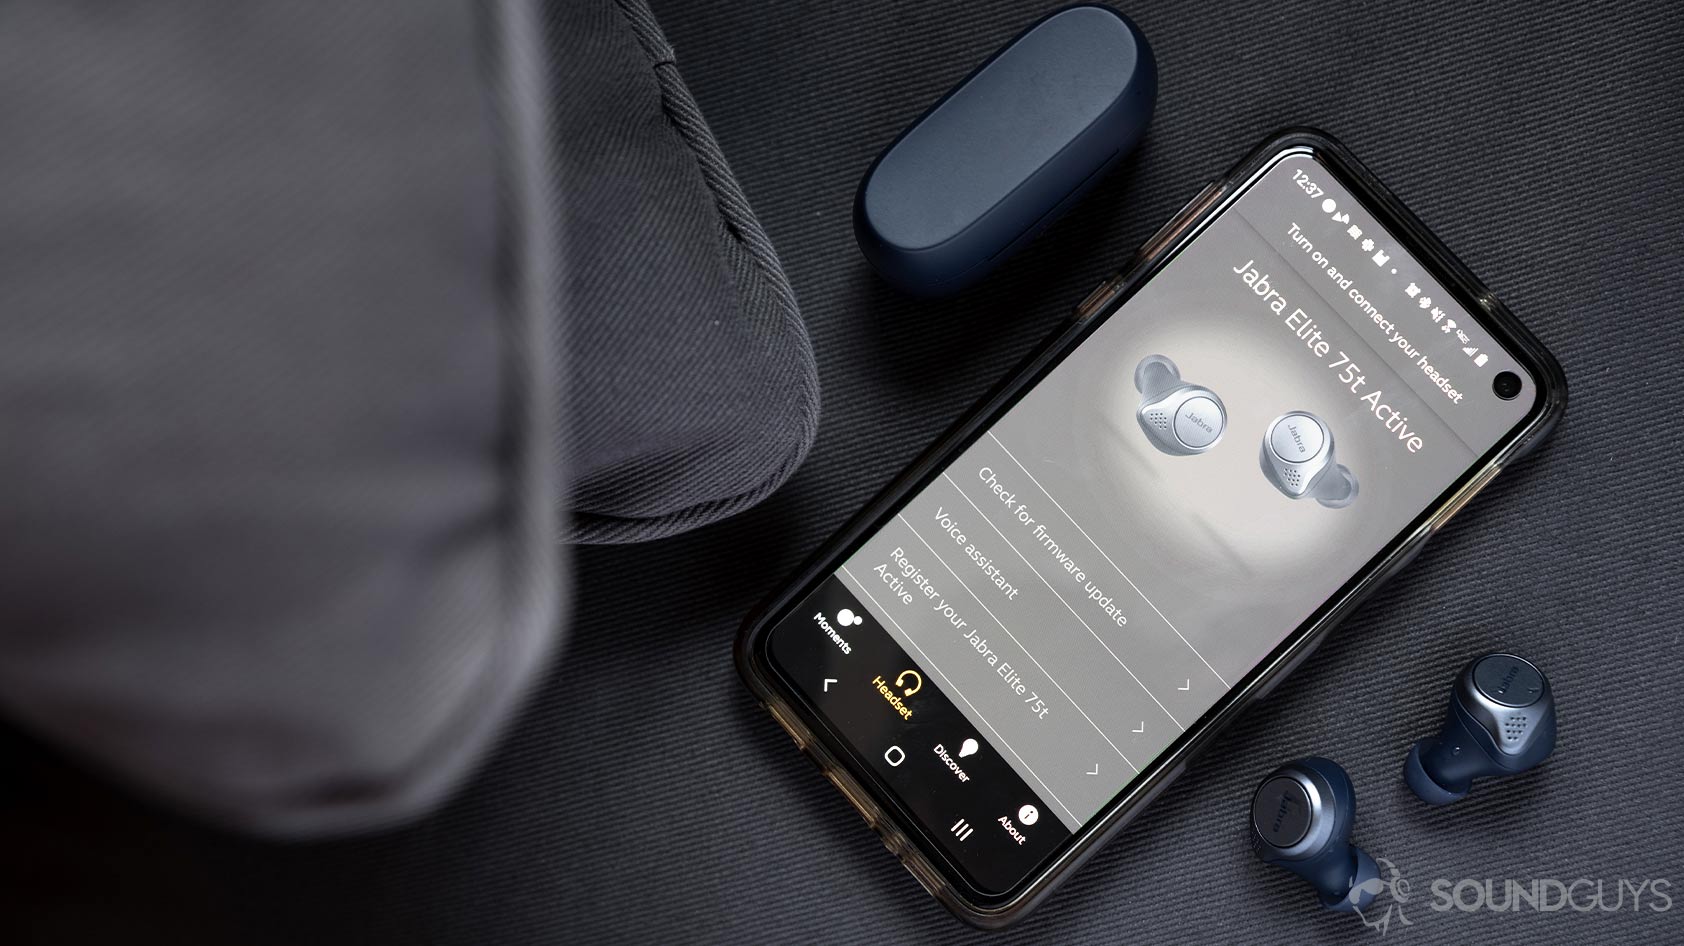 The Jabra MySound+ app on a Samsung Galaxy S10e for the Jabra Elite Active 75t true wireless workout earbuds (navy).